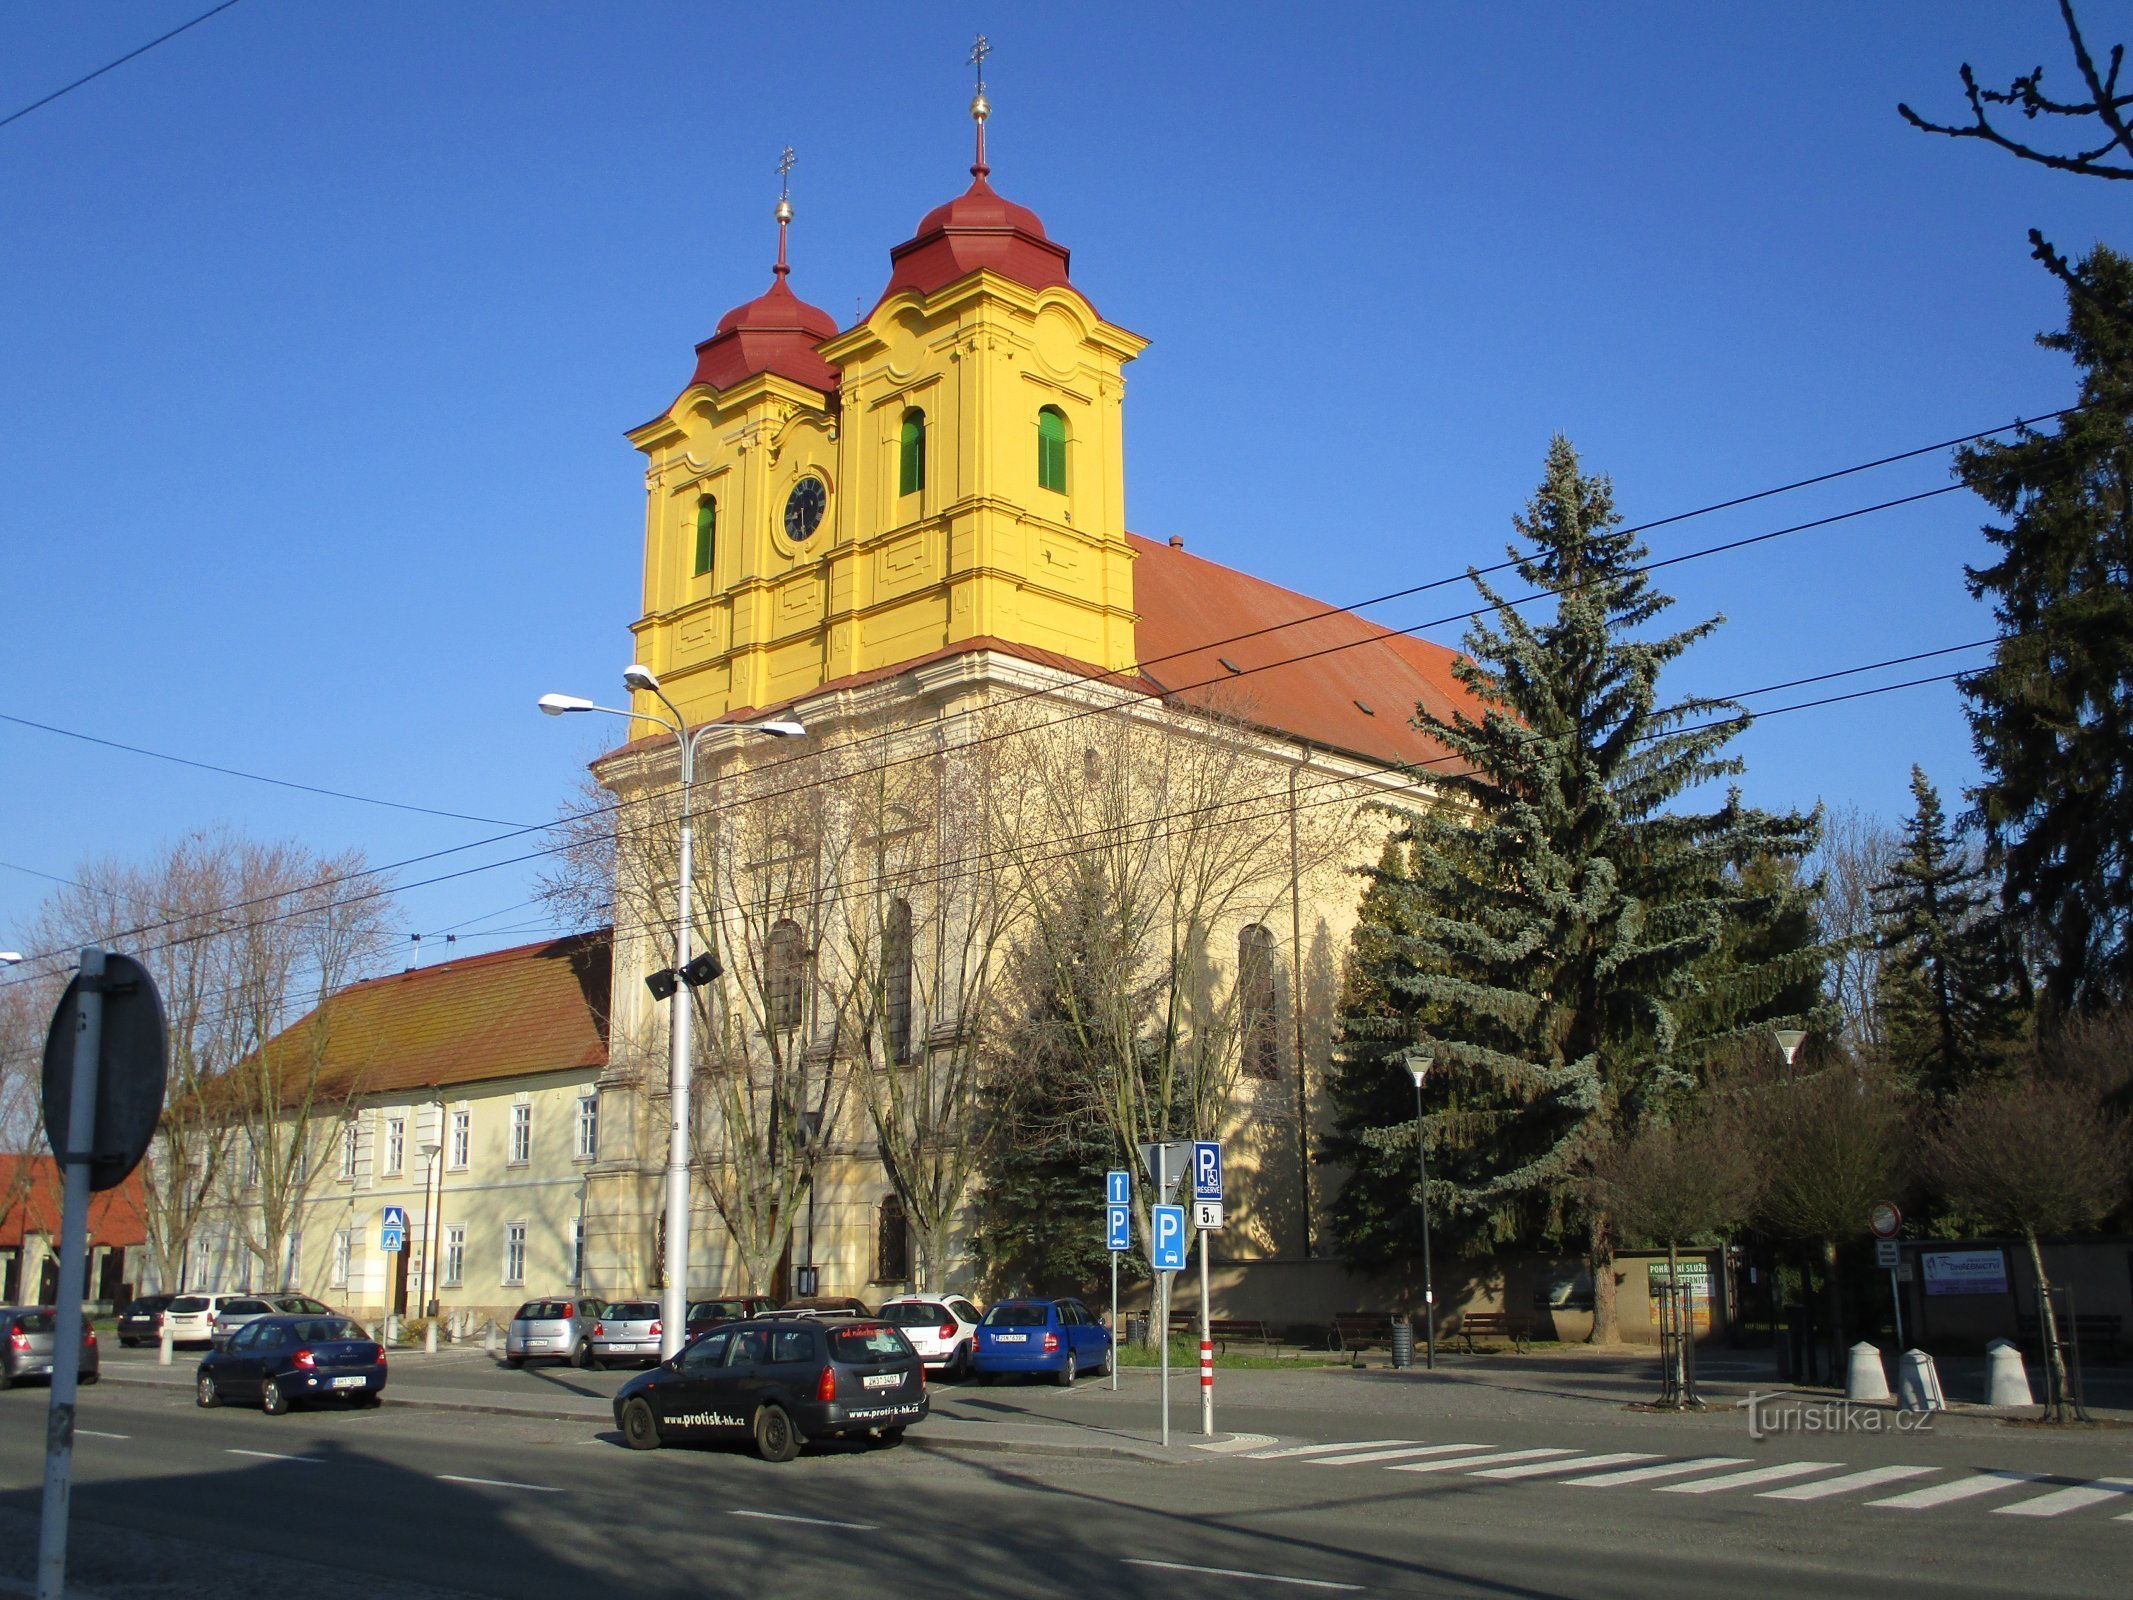 Église de St. Anny (Hradec Králové, 5.4.2020 avril XNUMX)